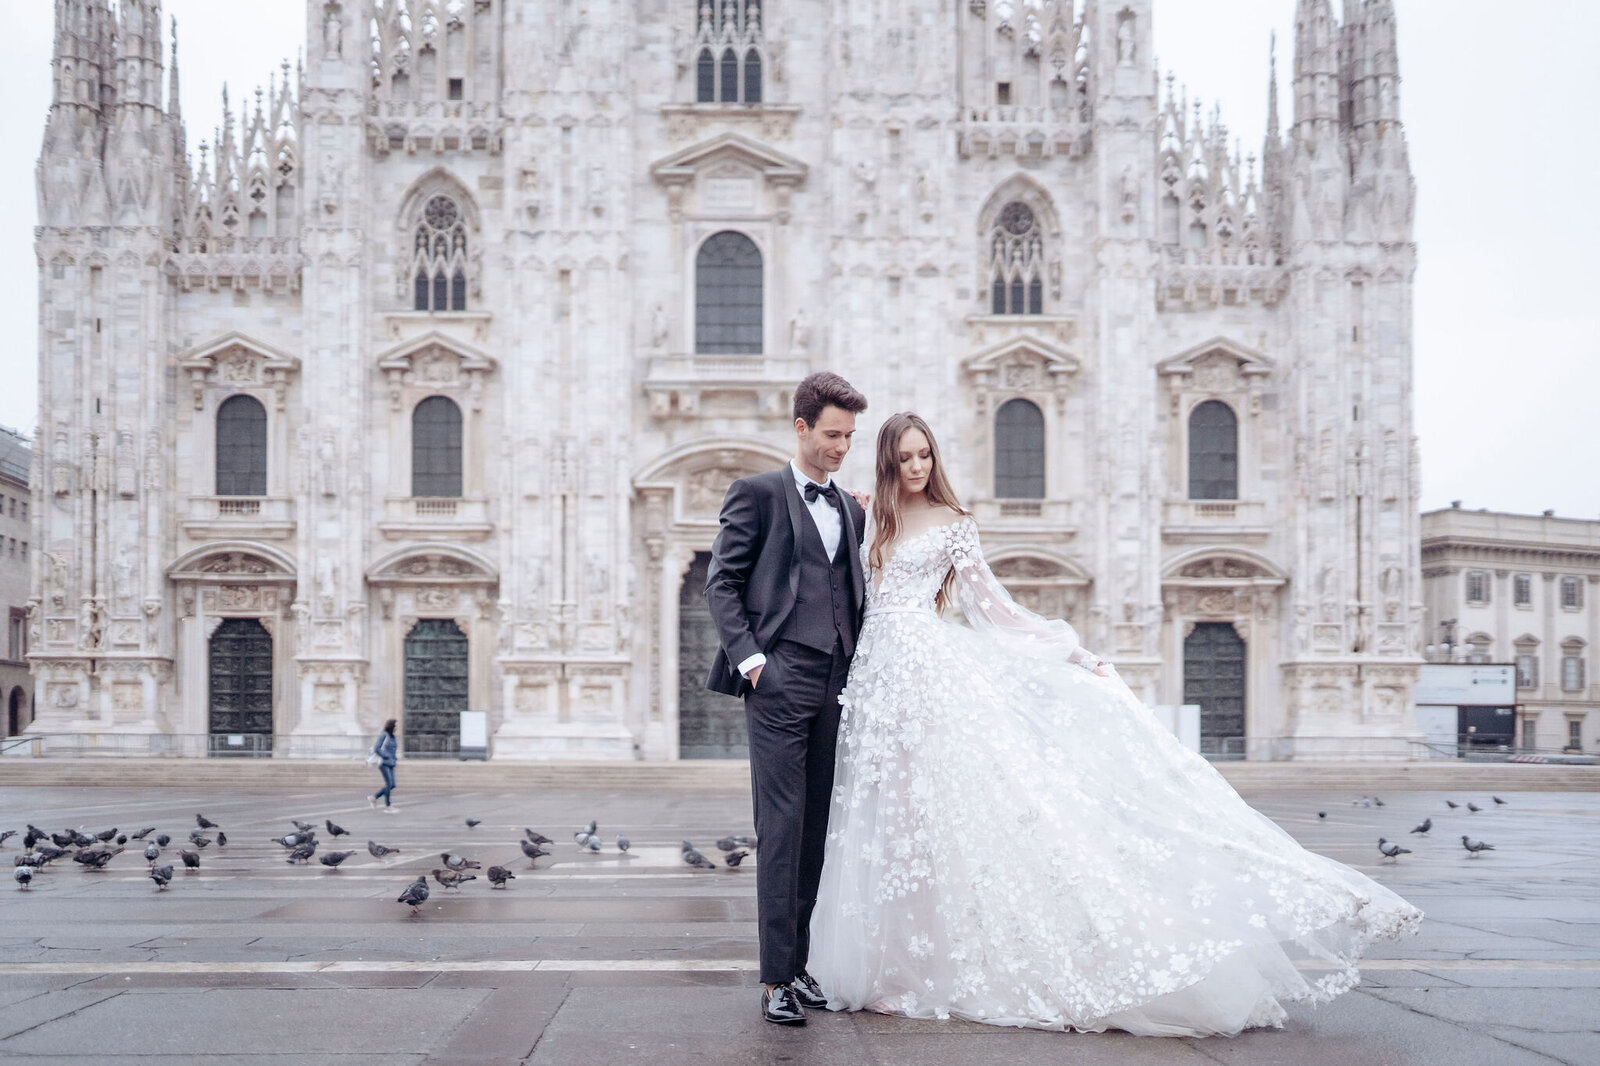 015-Milan-Duomo-Inspiration-Love-Story Elopement-Cinematic-Romance-Destination-Wedding-Editorial-Luxury-Fine-Art-Lisa-Vigliotta-Photography